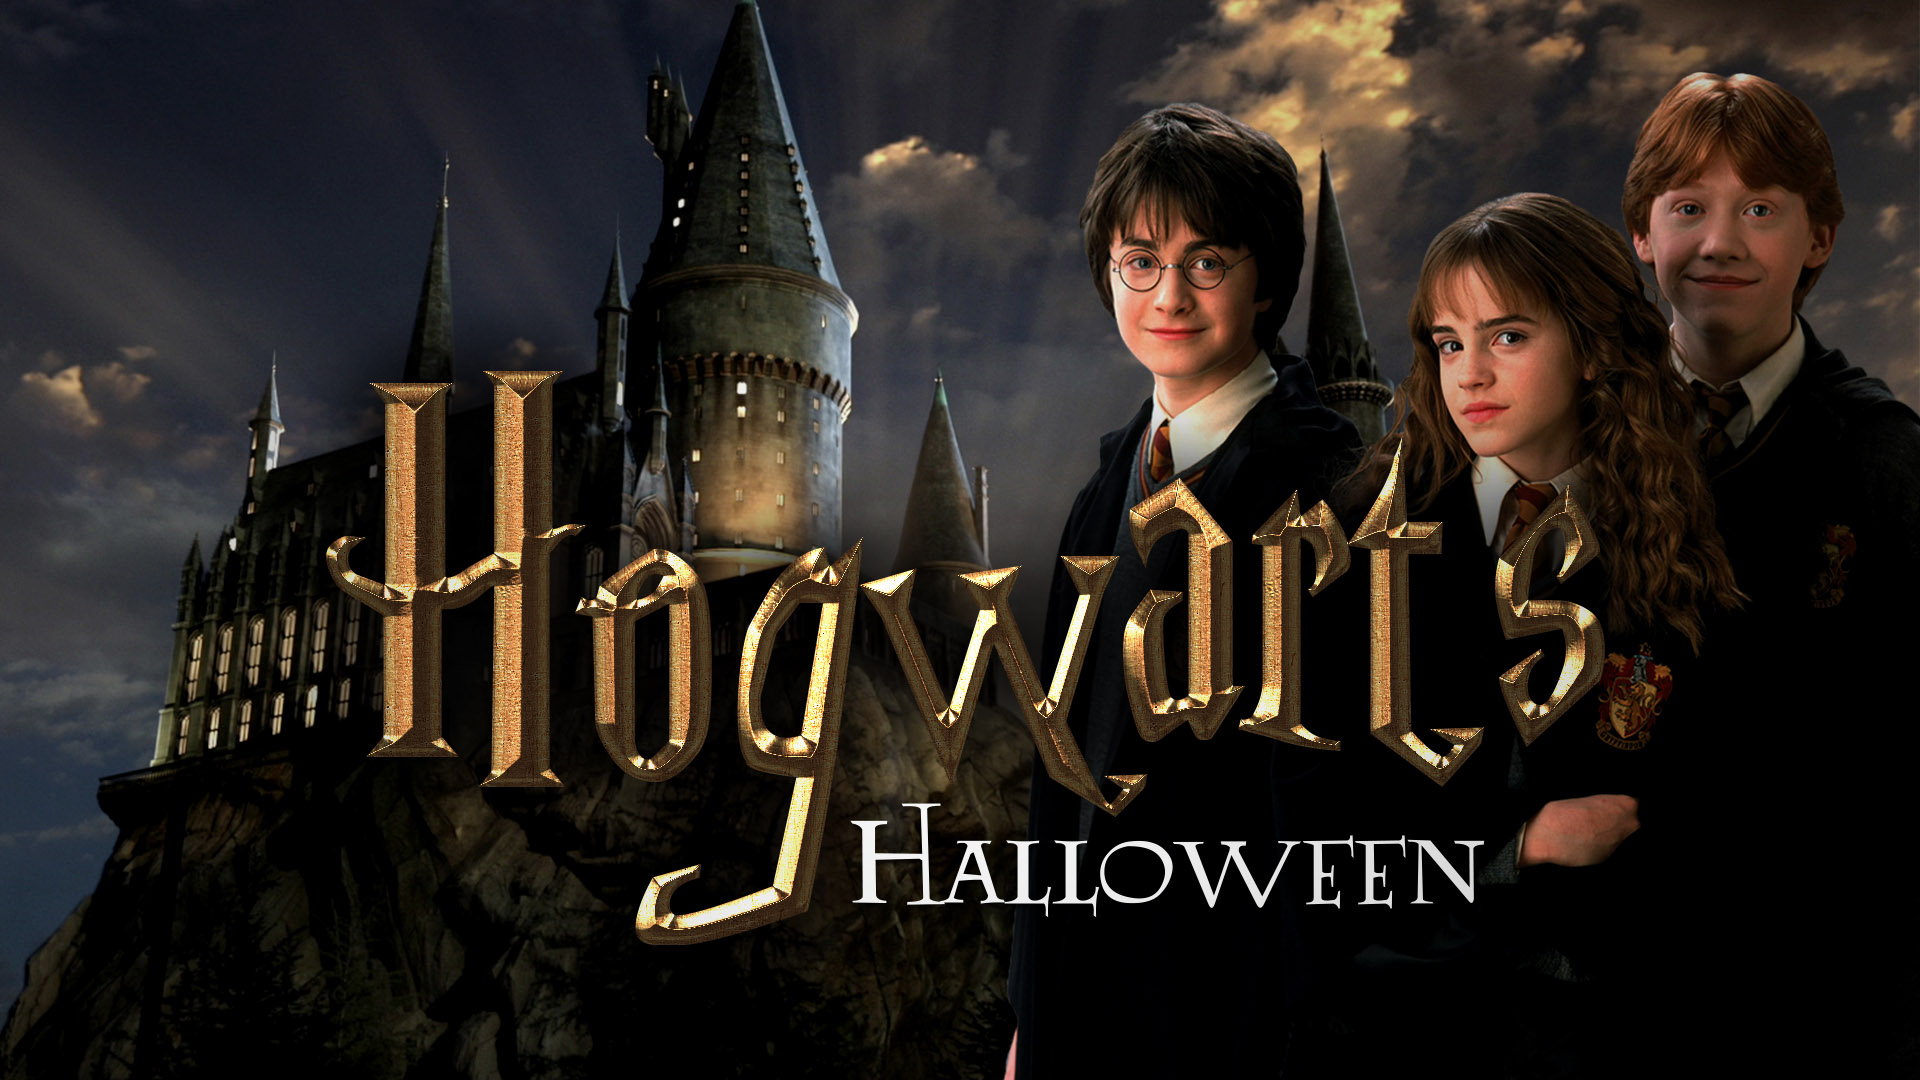    Hogwarts Halloween